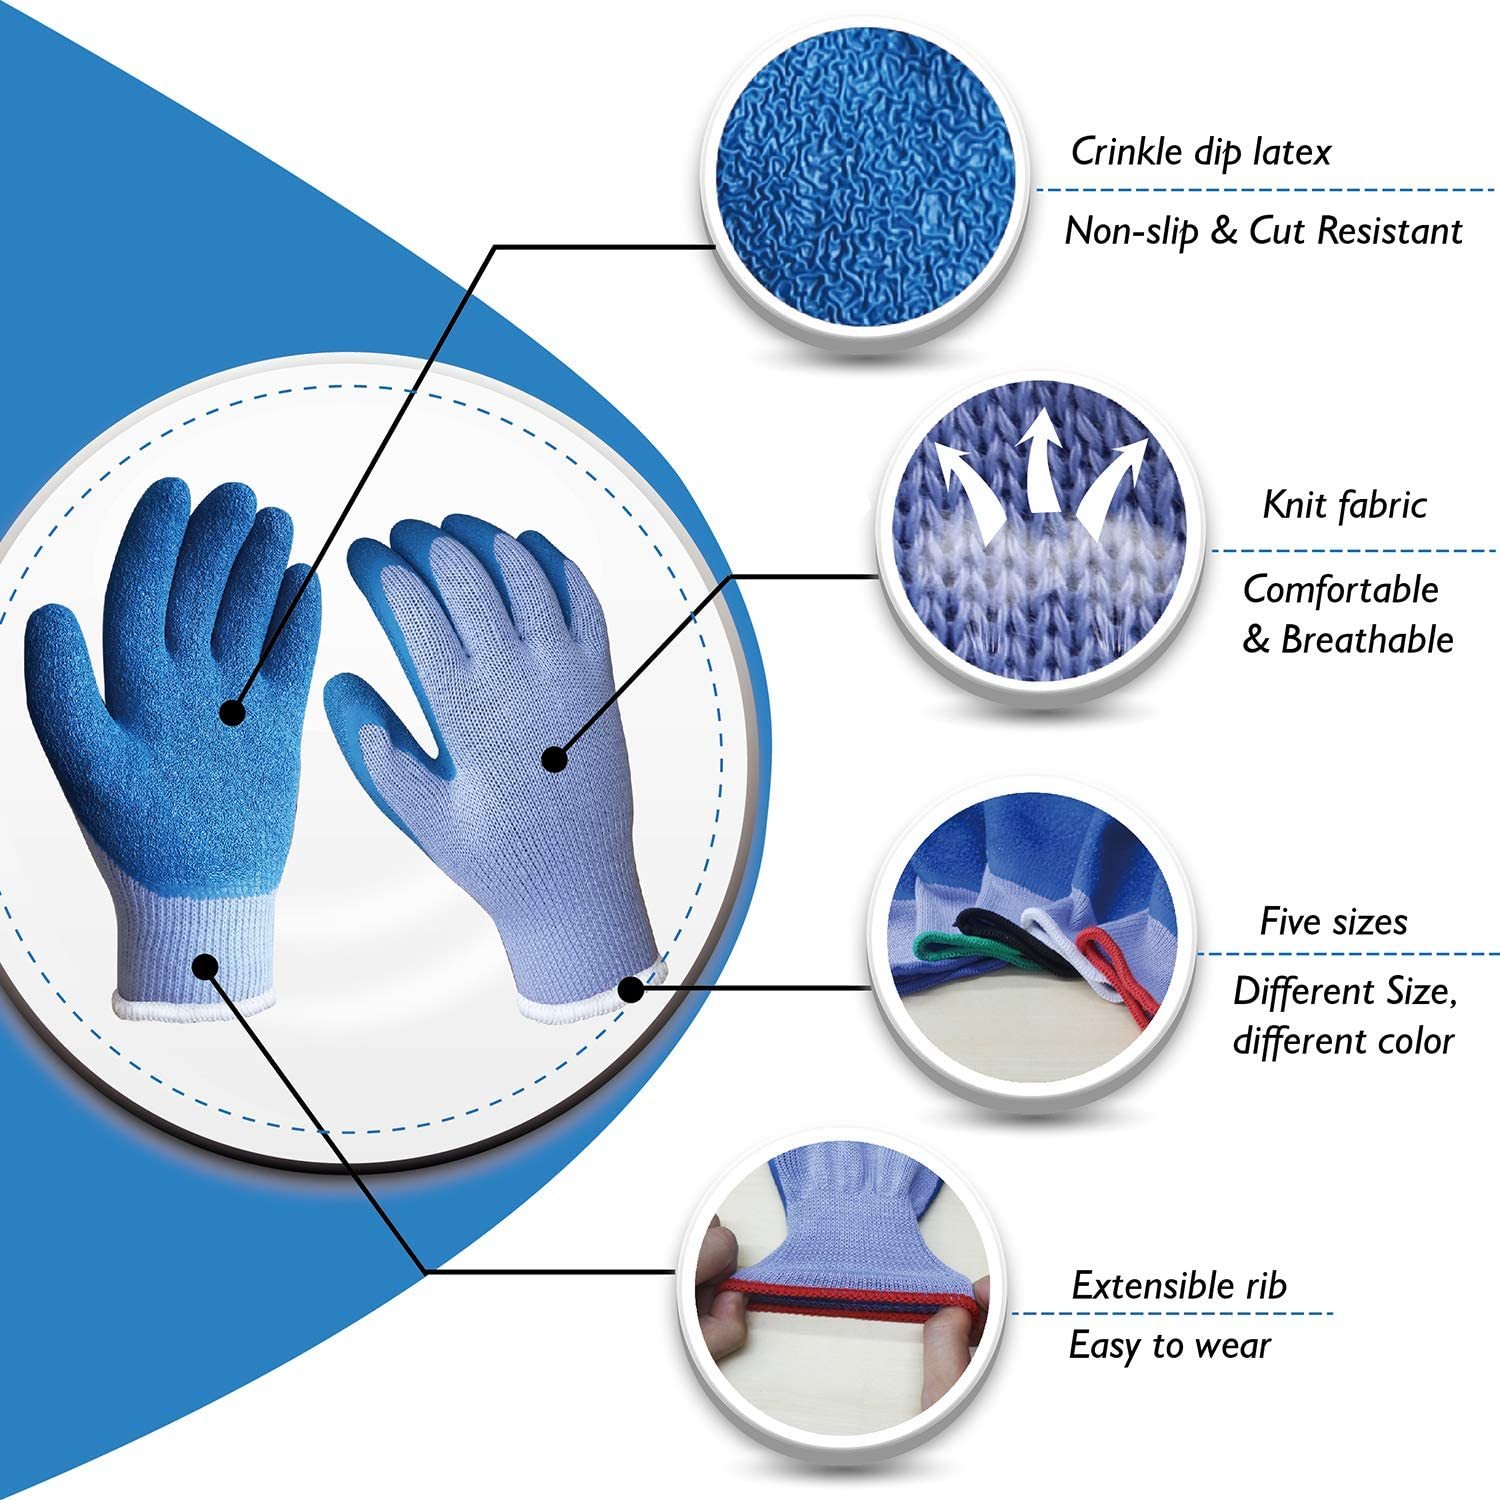 Evridwear 12 Pairs PU Coated Work Gloves Ultra-Thin Anti-Slip Latex-Free Safety Glove for Men & Women Light Duty Work